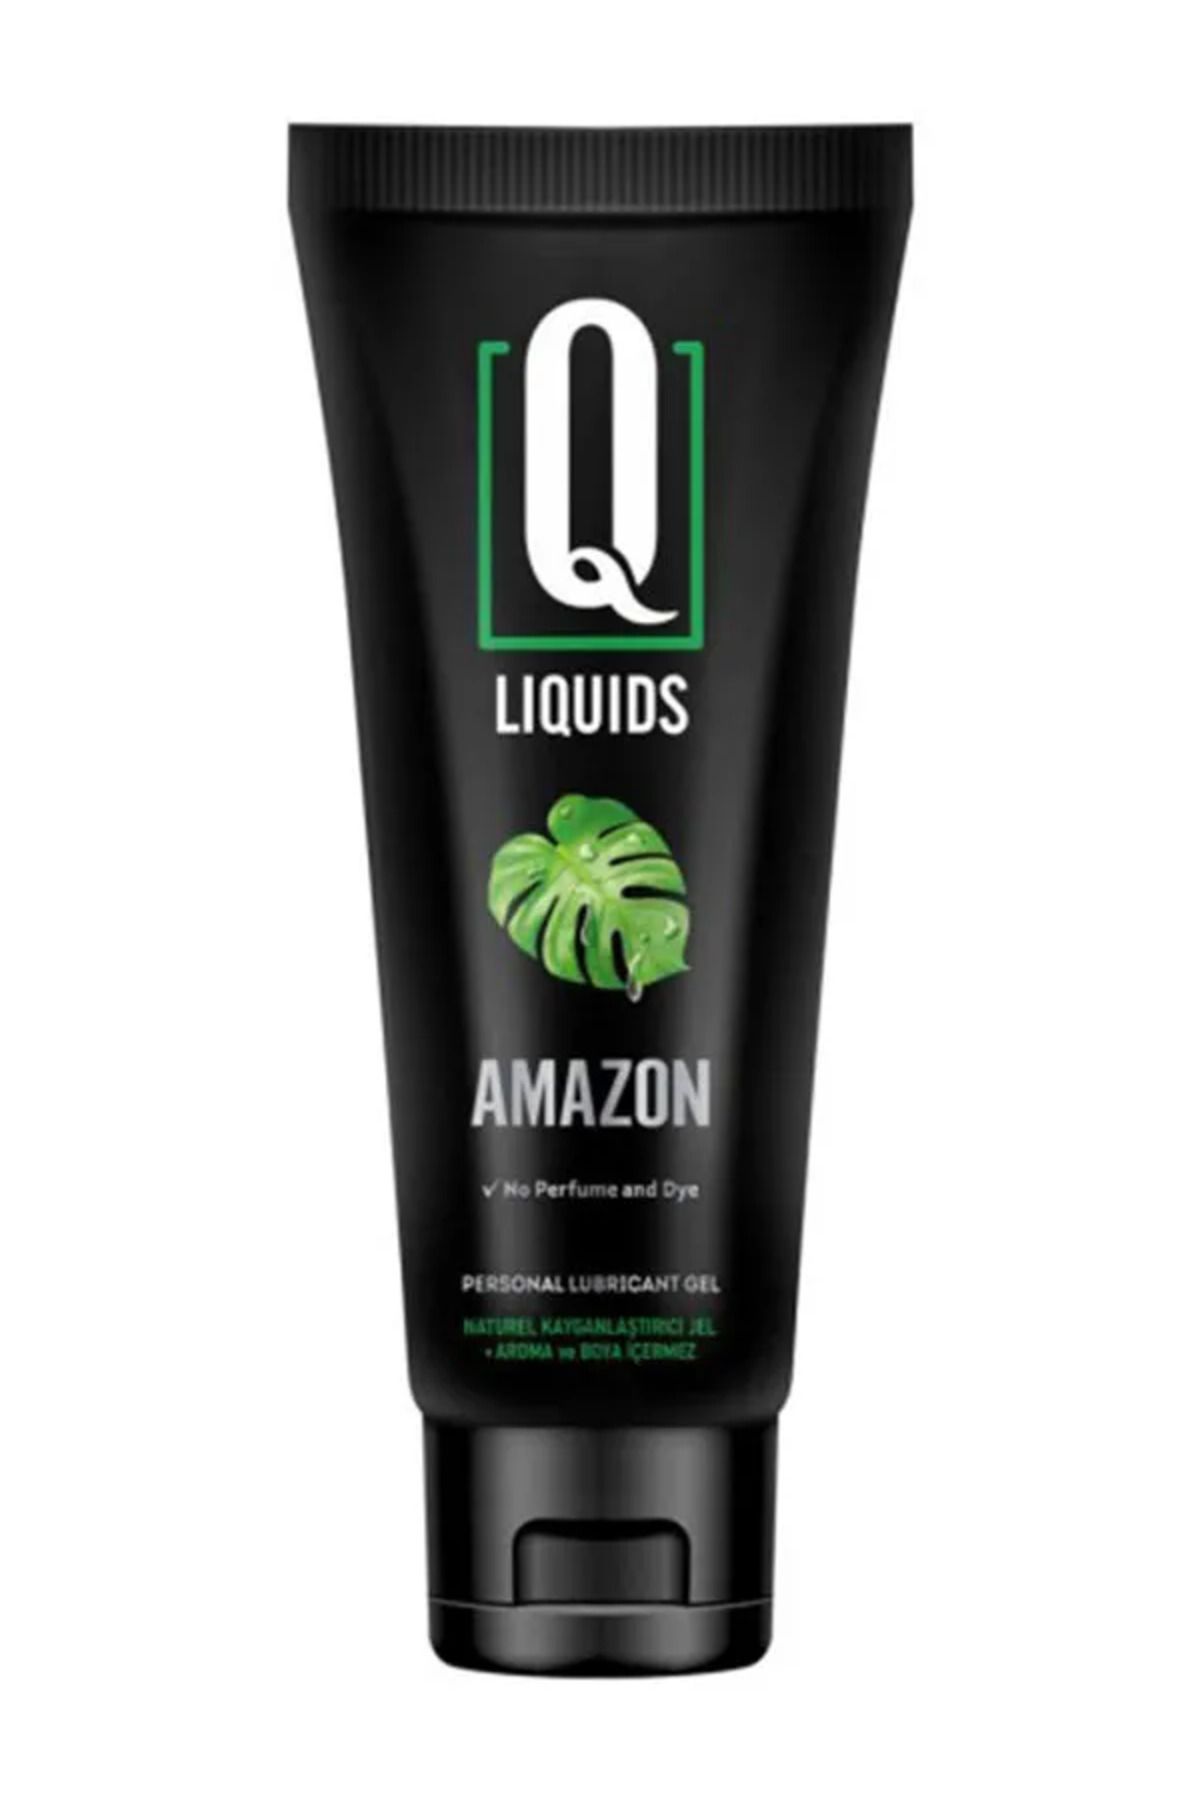 Q LIQUIDS Amazon Naturel Kayganlaştırıcı Jel 200 ml